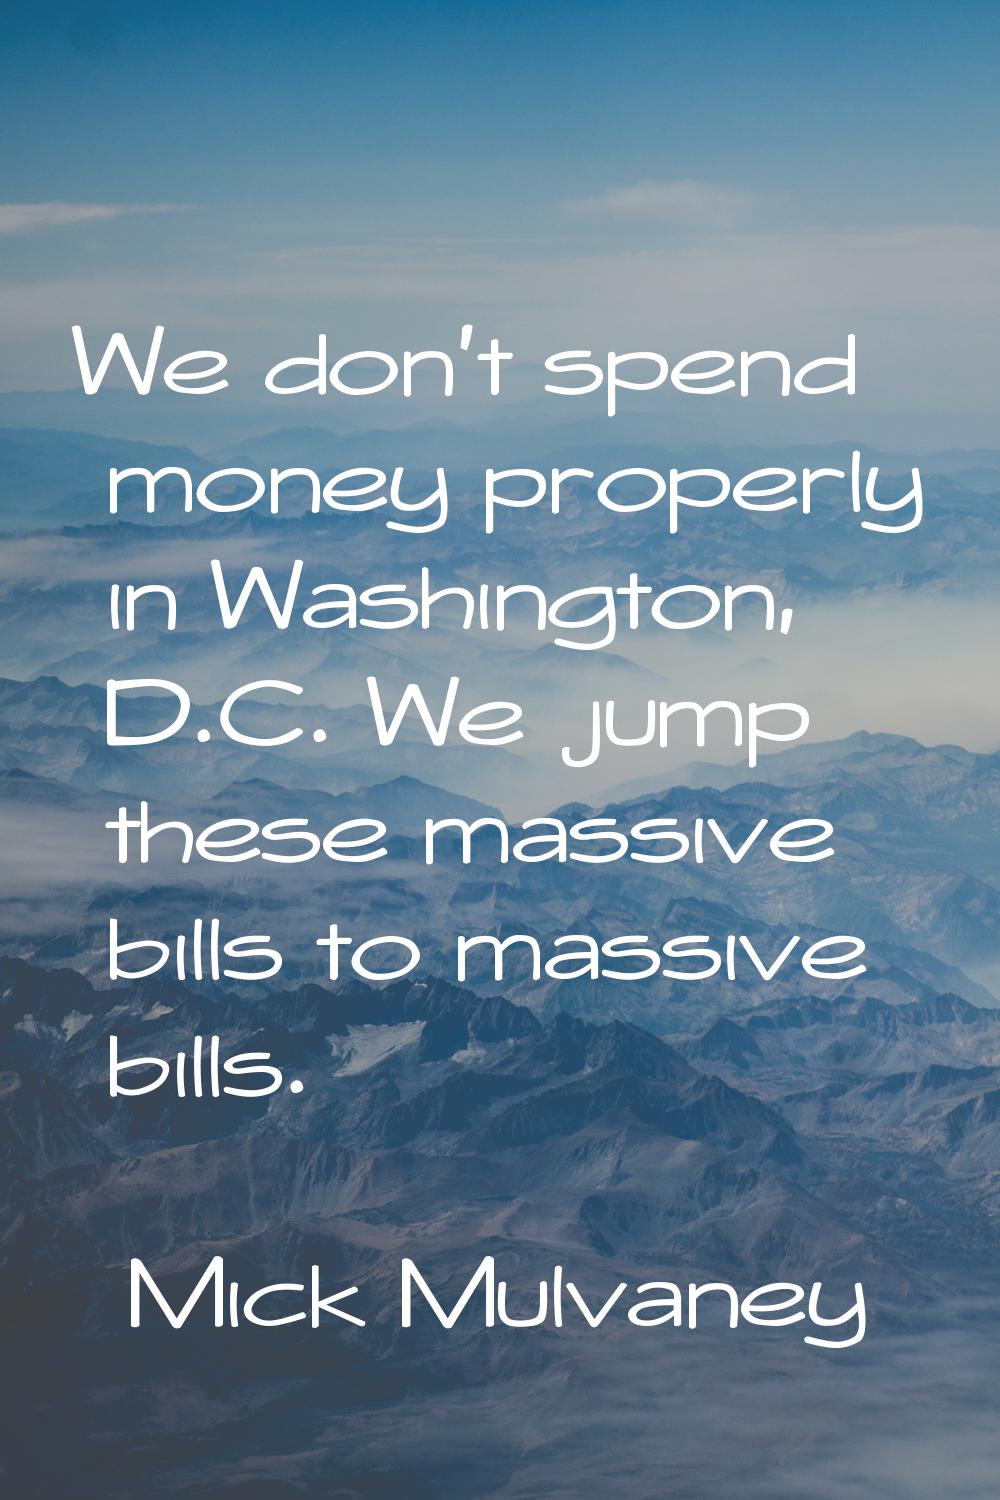 We don't spend money properly in Washington, D.C. We jump these massive bills to massive bills.